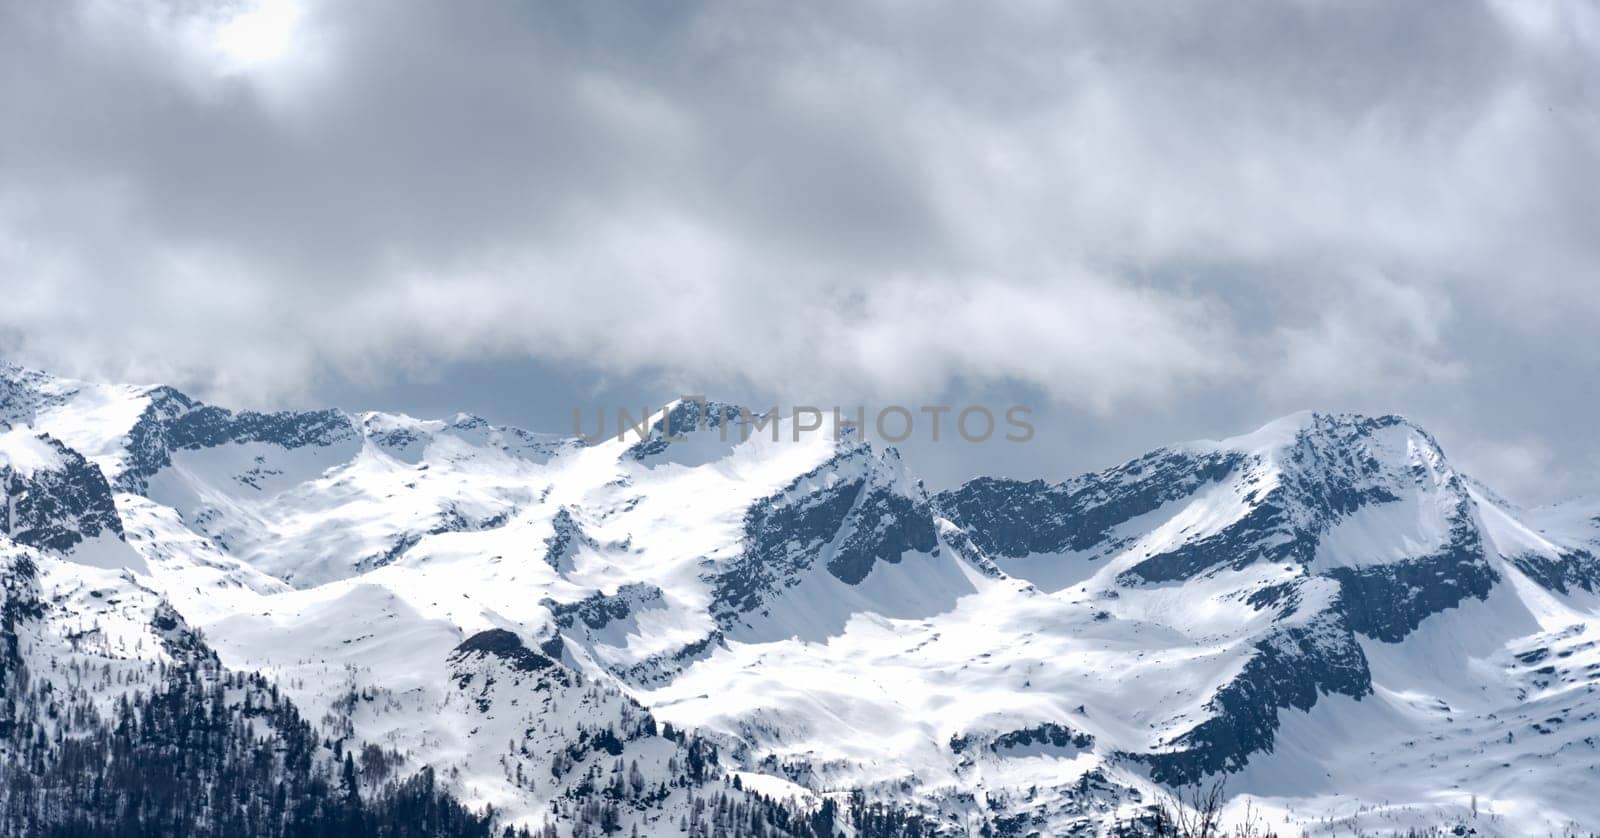 Snowy mountain and cloudy sky in Austrian alps by Millenn